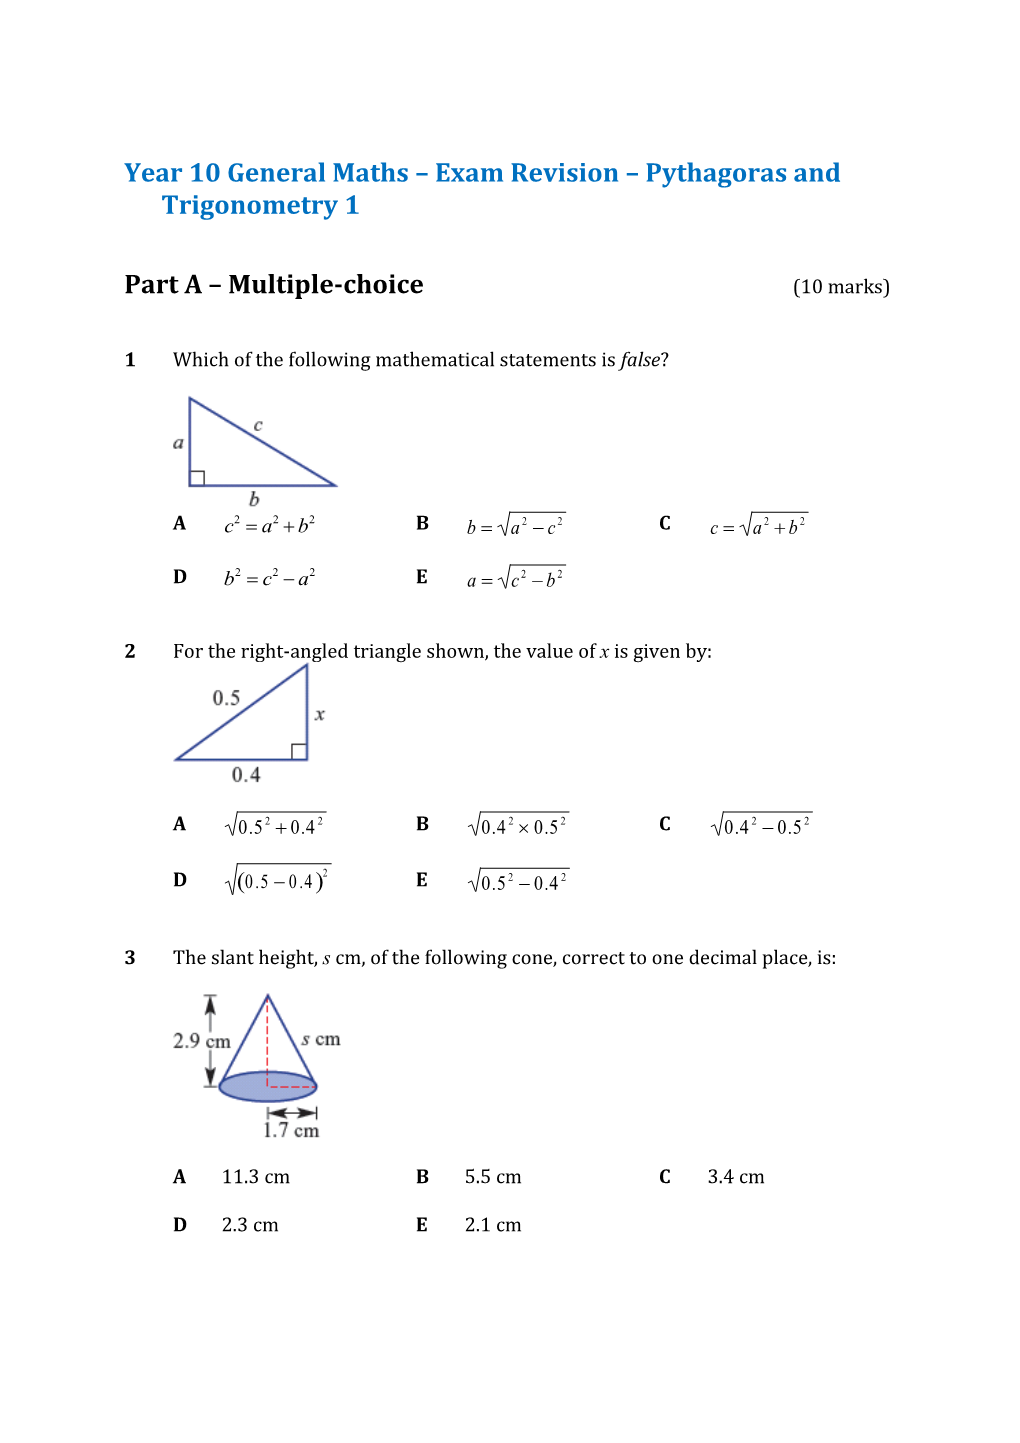 Year 10 General Maths Exam Revision Pythagoras and Trigonometry 1